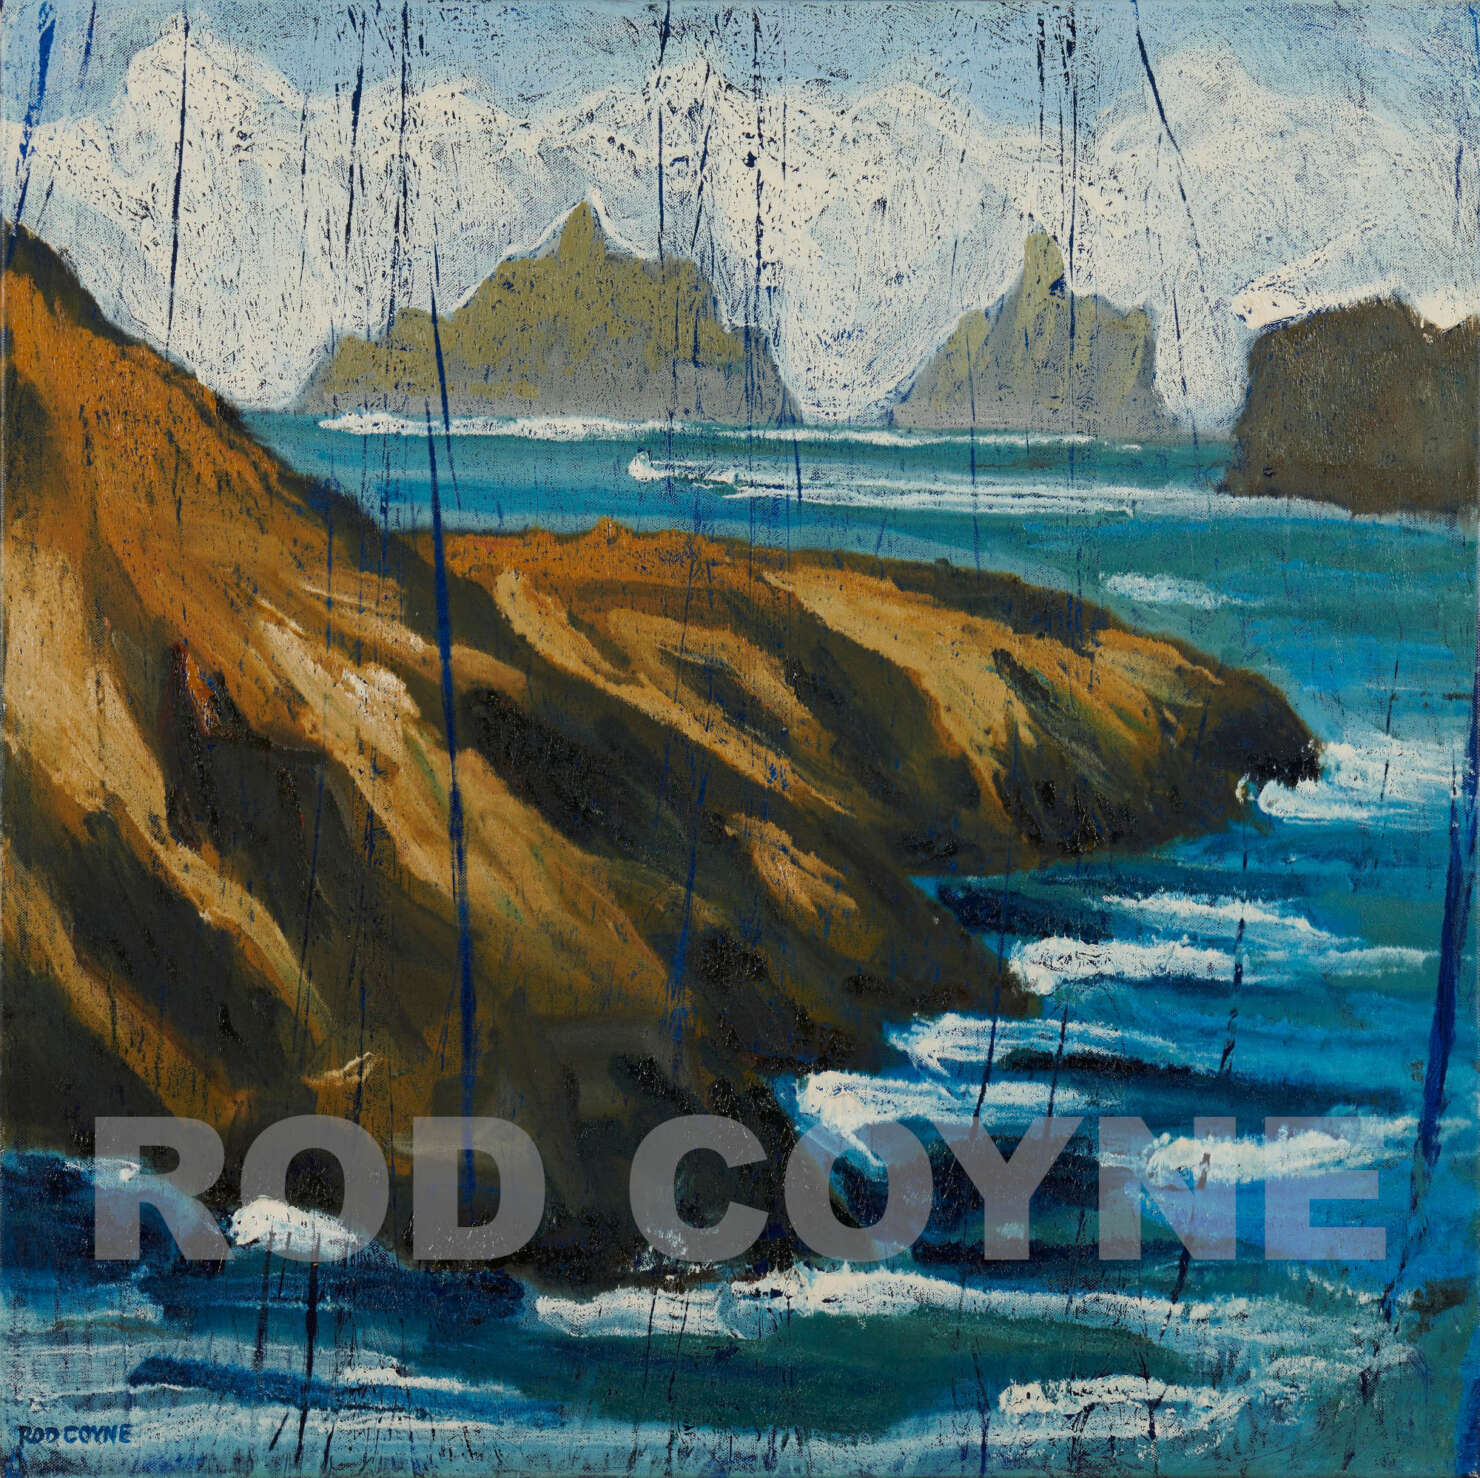 artist rod coyne's seascape "Kerry Islands" is shown here watermarked.